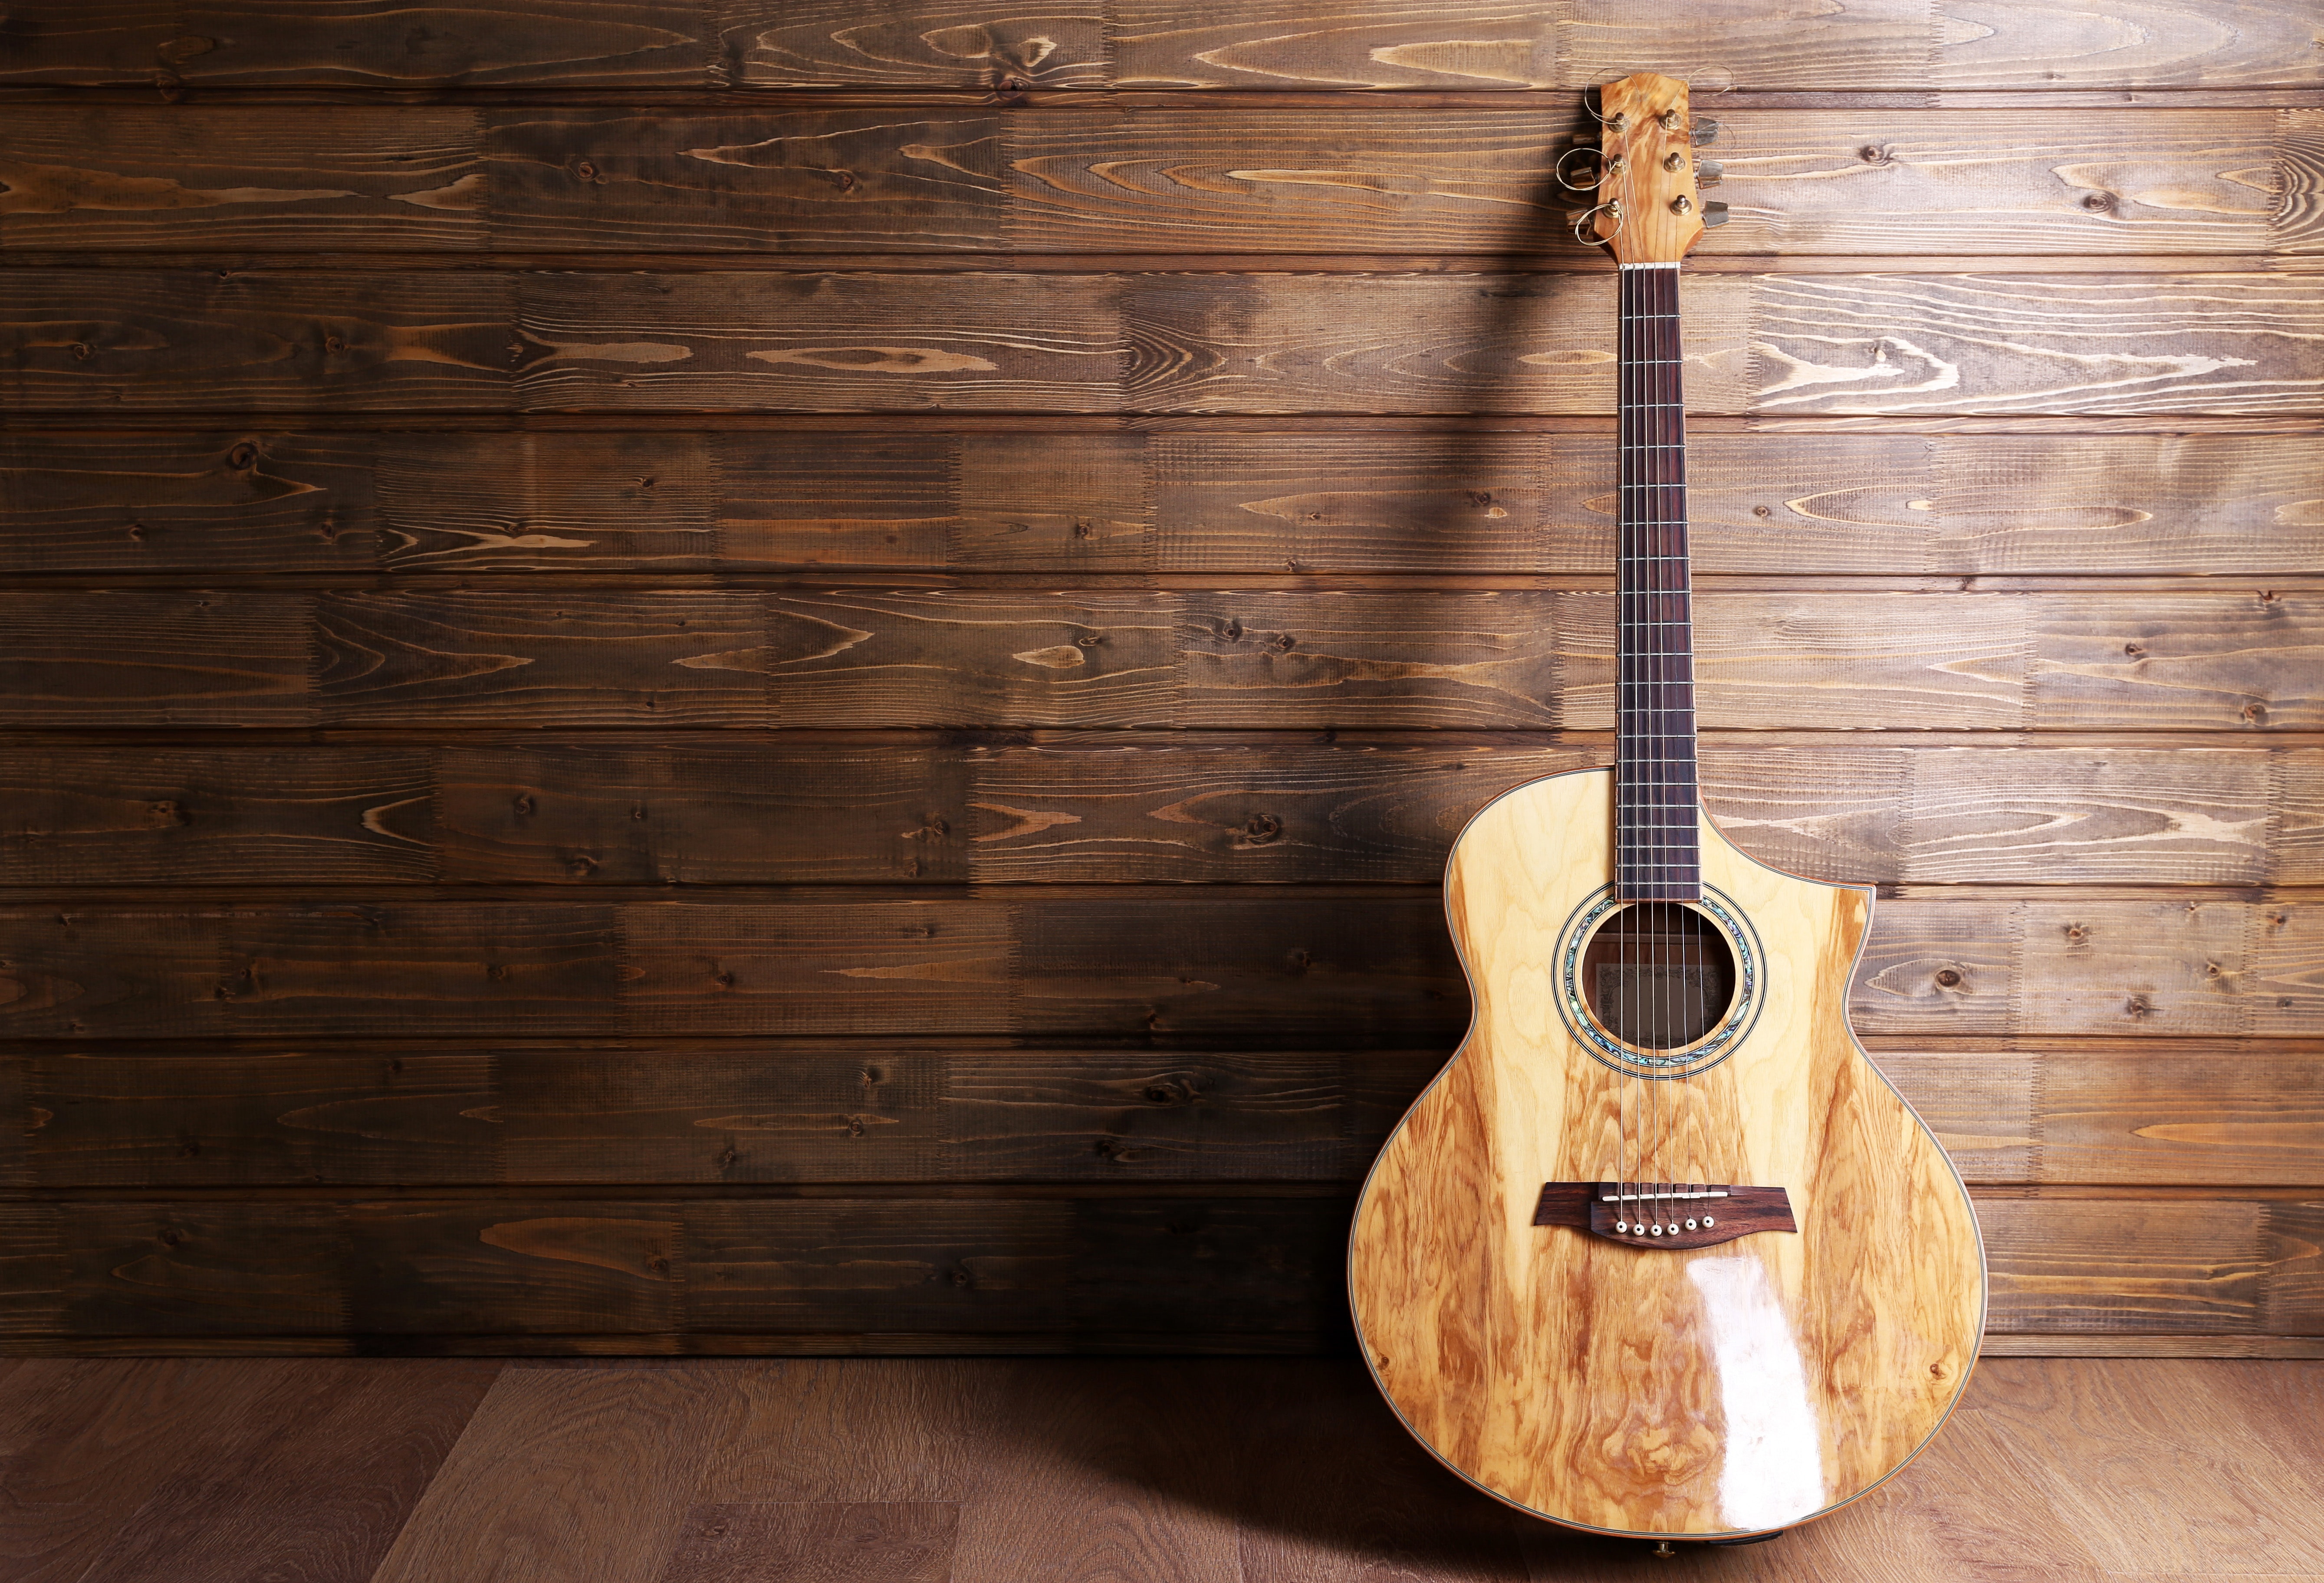 Acoustic Instruments, classical guitar, flooring, instrument, classic